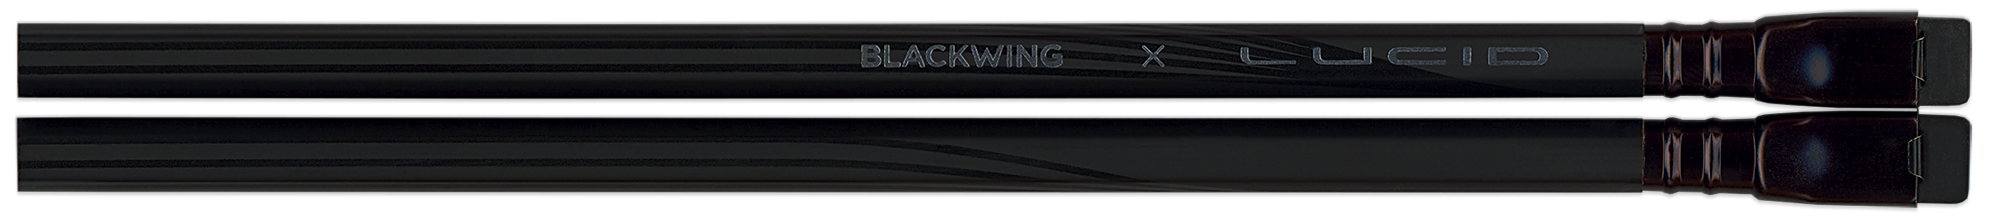 Blackwing X Lucid pencils